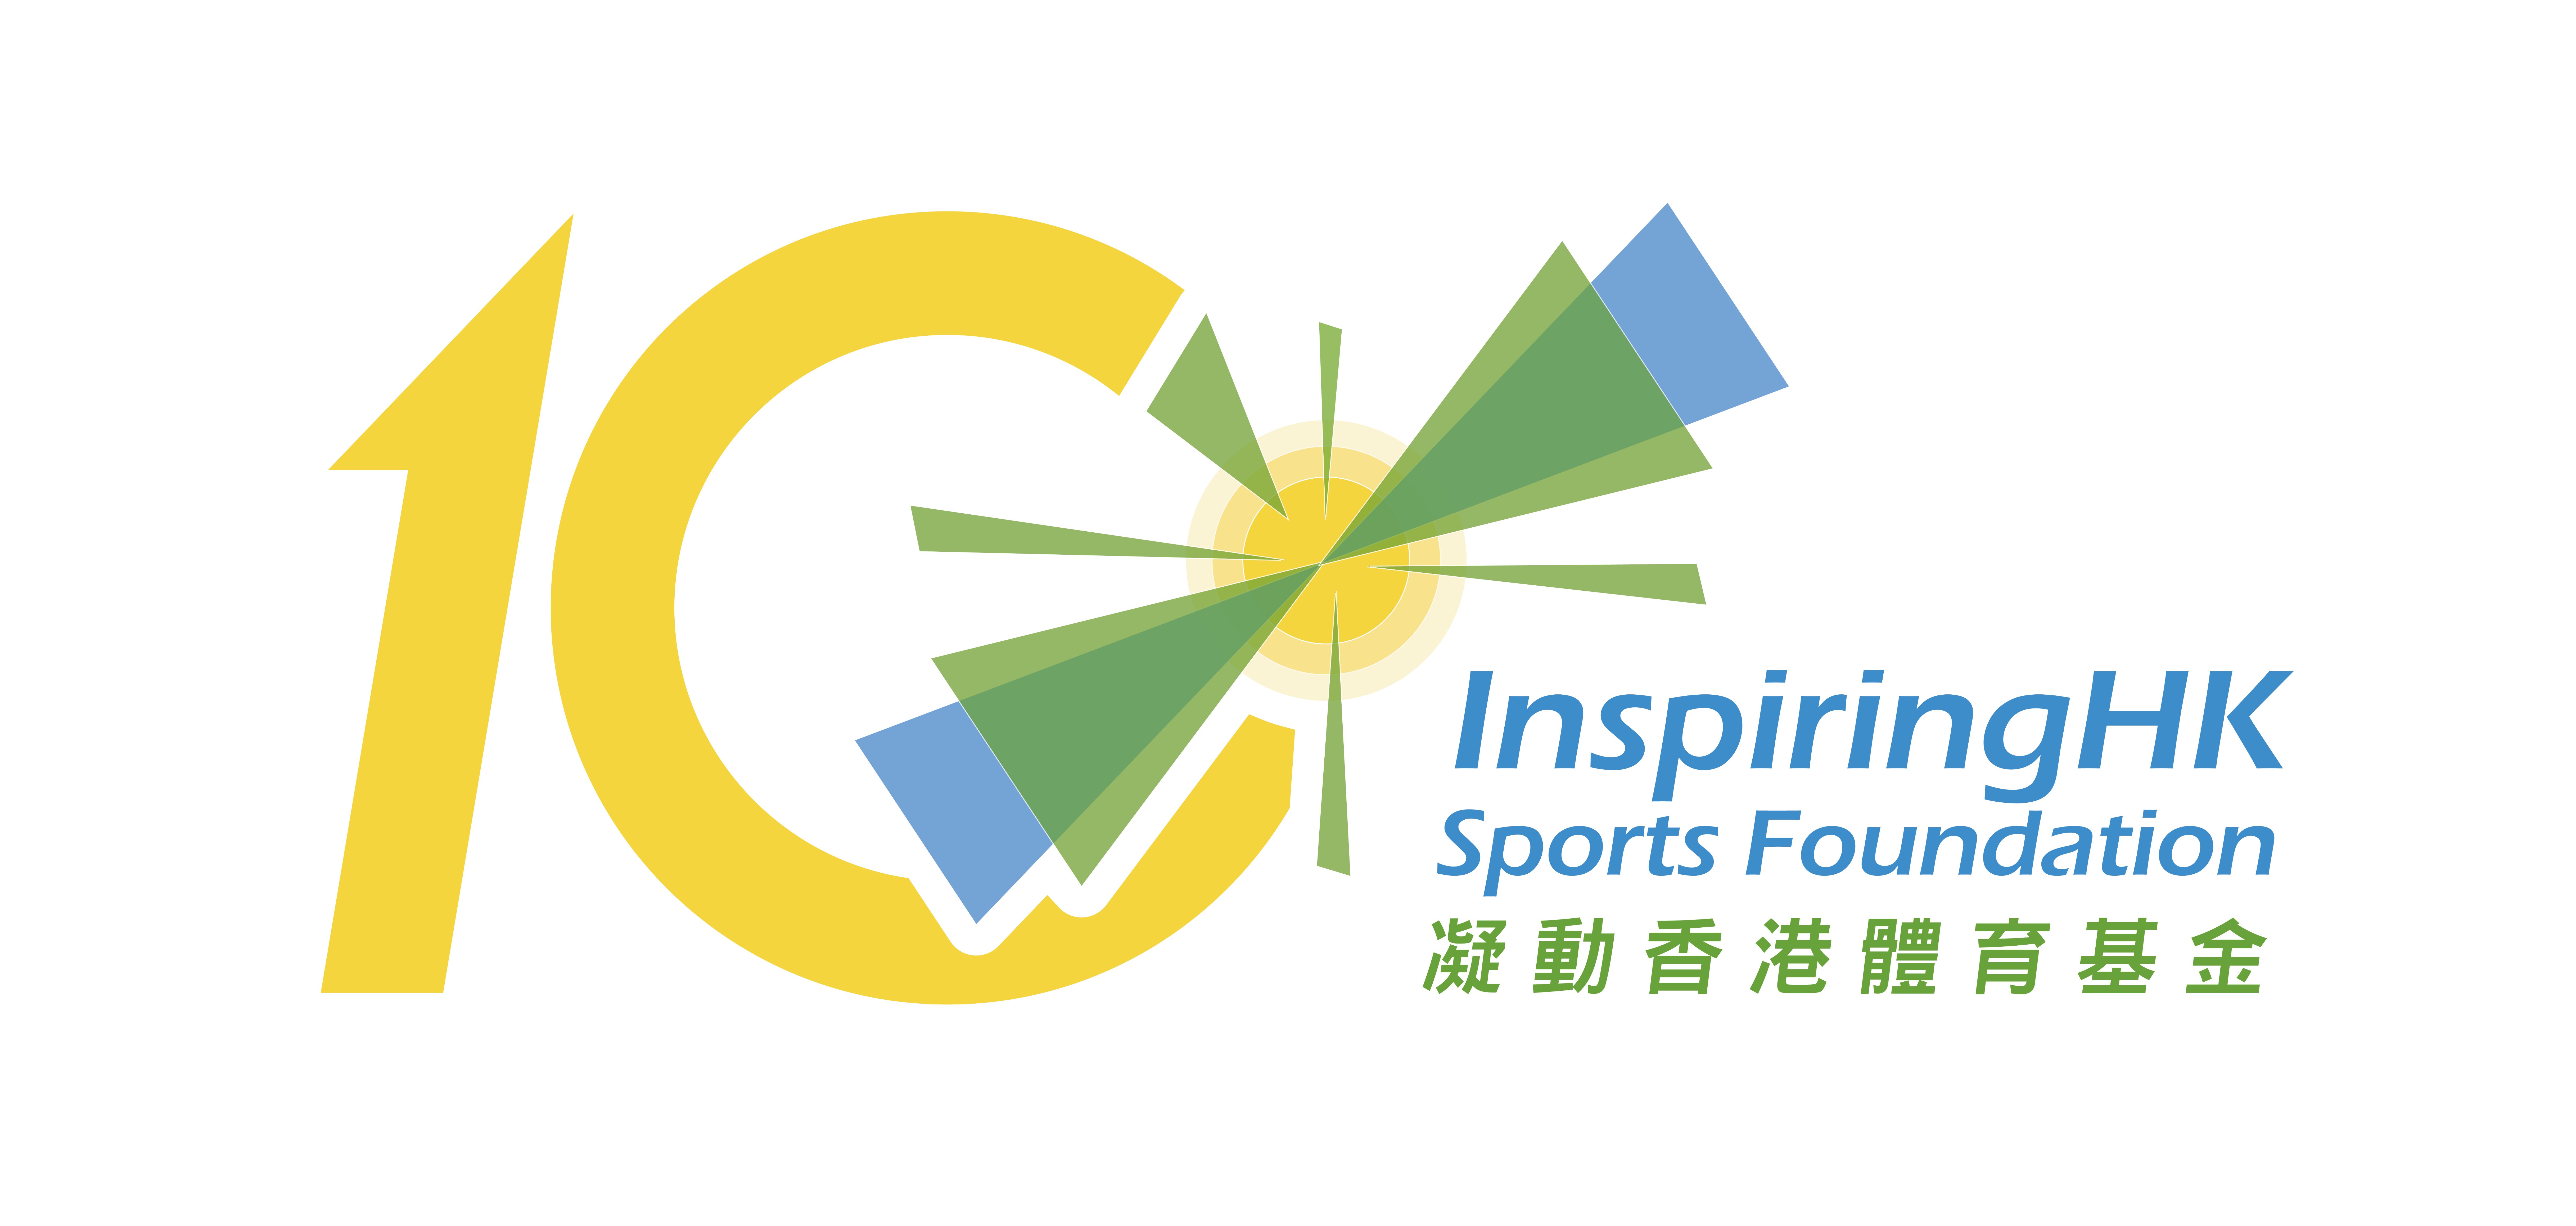 InspiringHK Sports Foundation 凝動香港體育基金